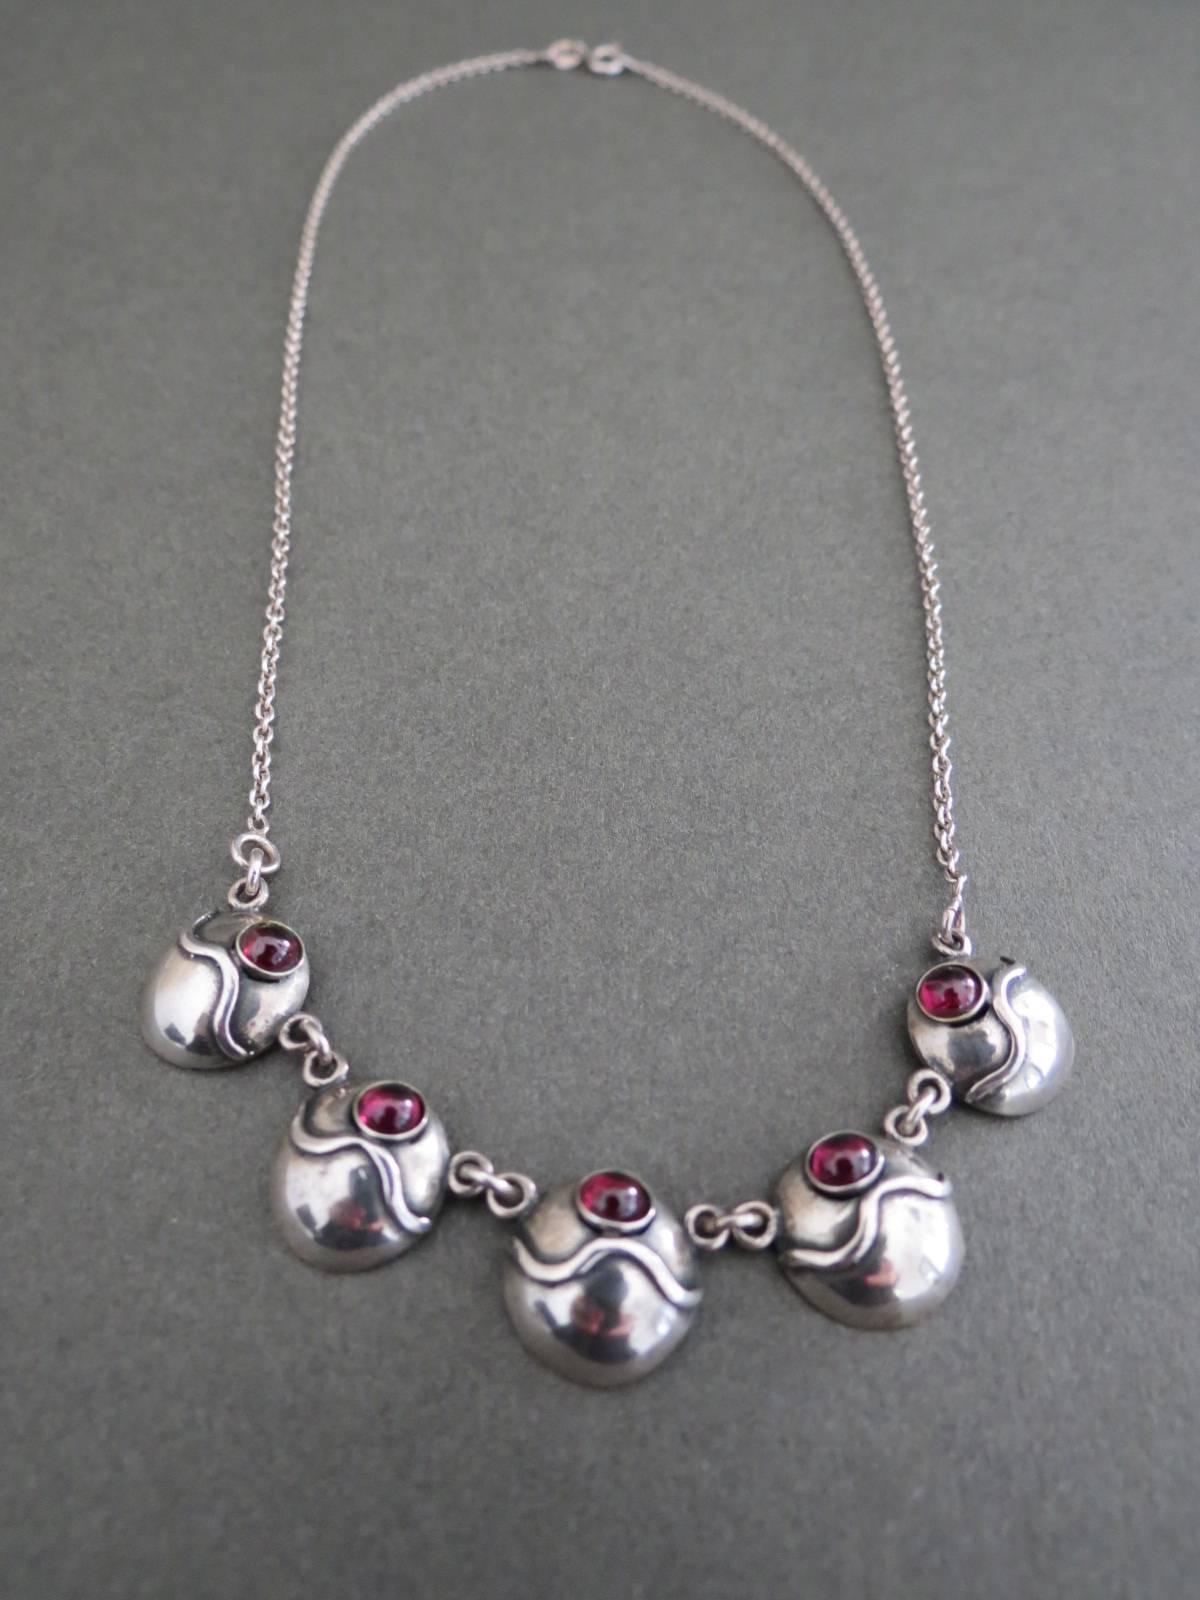 Vintage Silver Garnet Necklace .
Item Specifics
Length: 41cm (approx 16.00